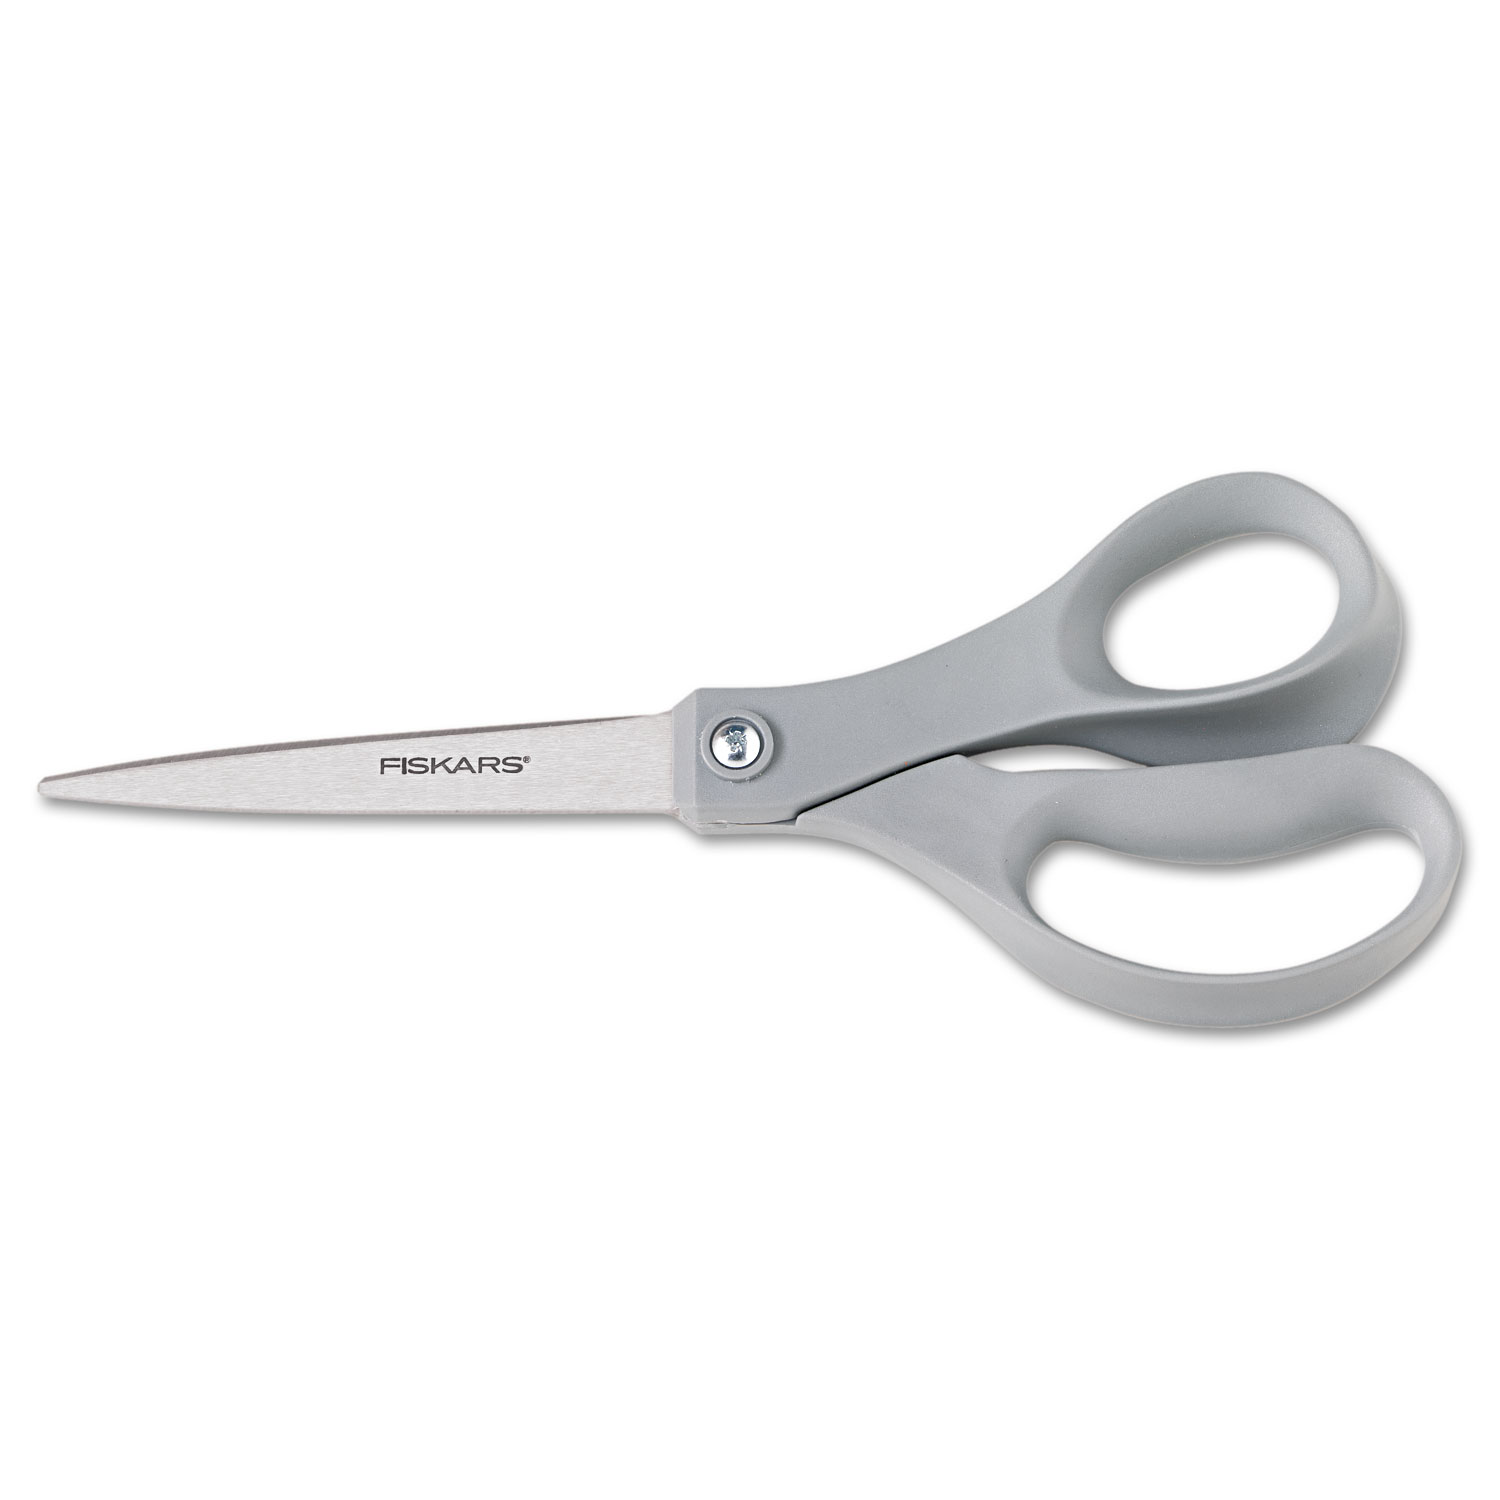  Fiskars 01-004249 Contoured Performance Scissors, 8 Long, 3.5 Cut Length, Gray Straight Handle (FSK01004249J) 